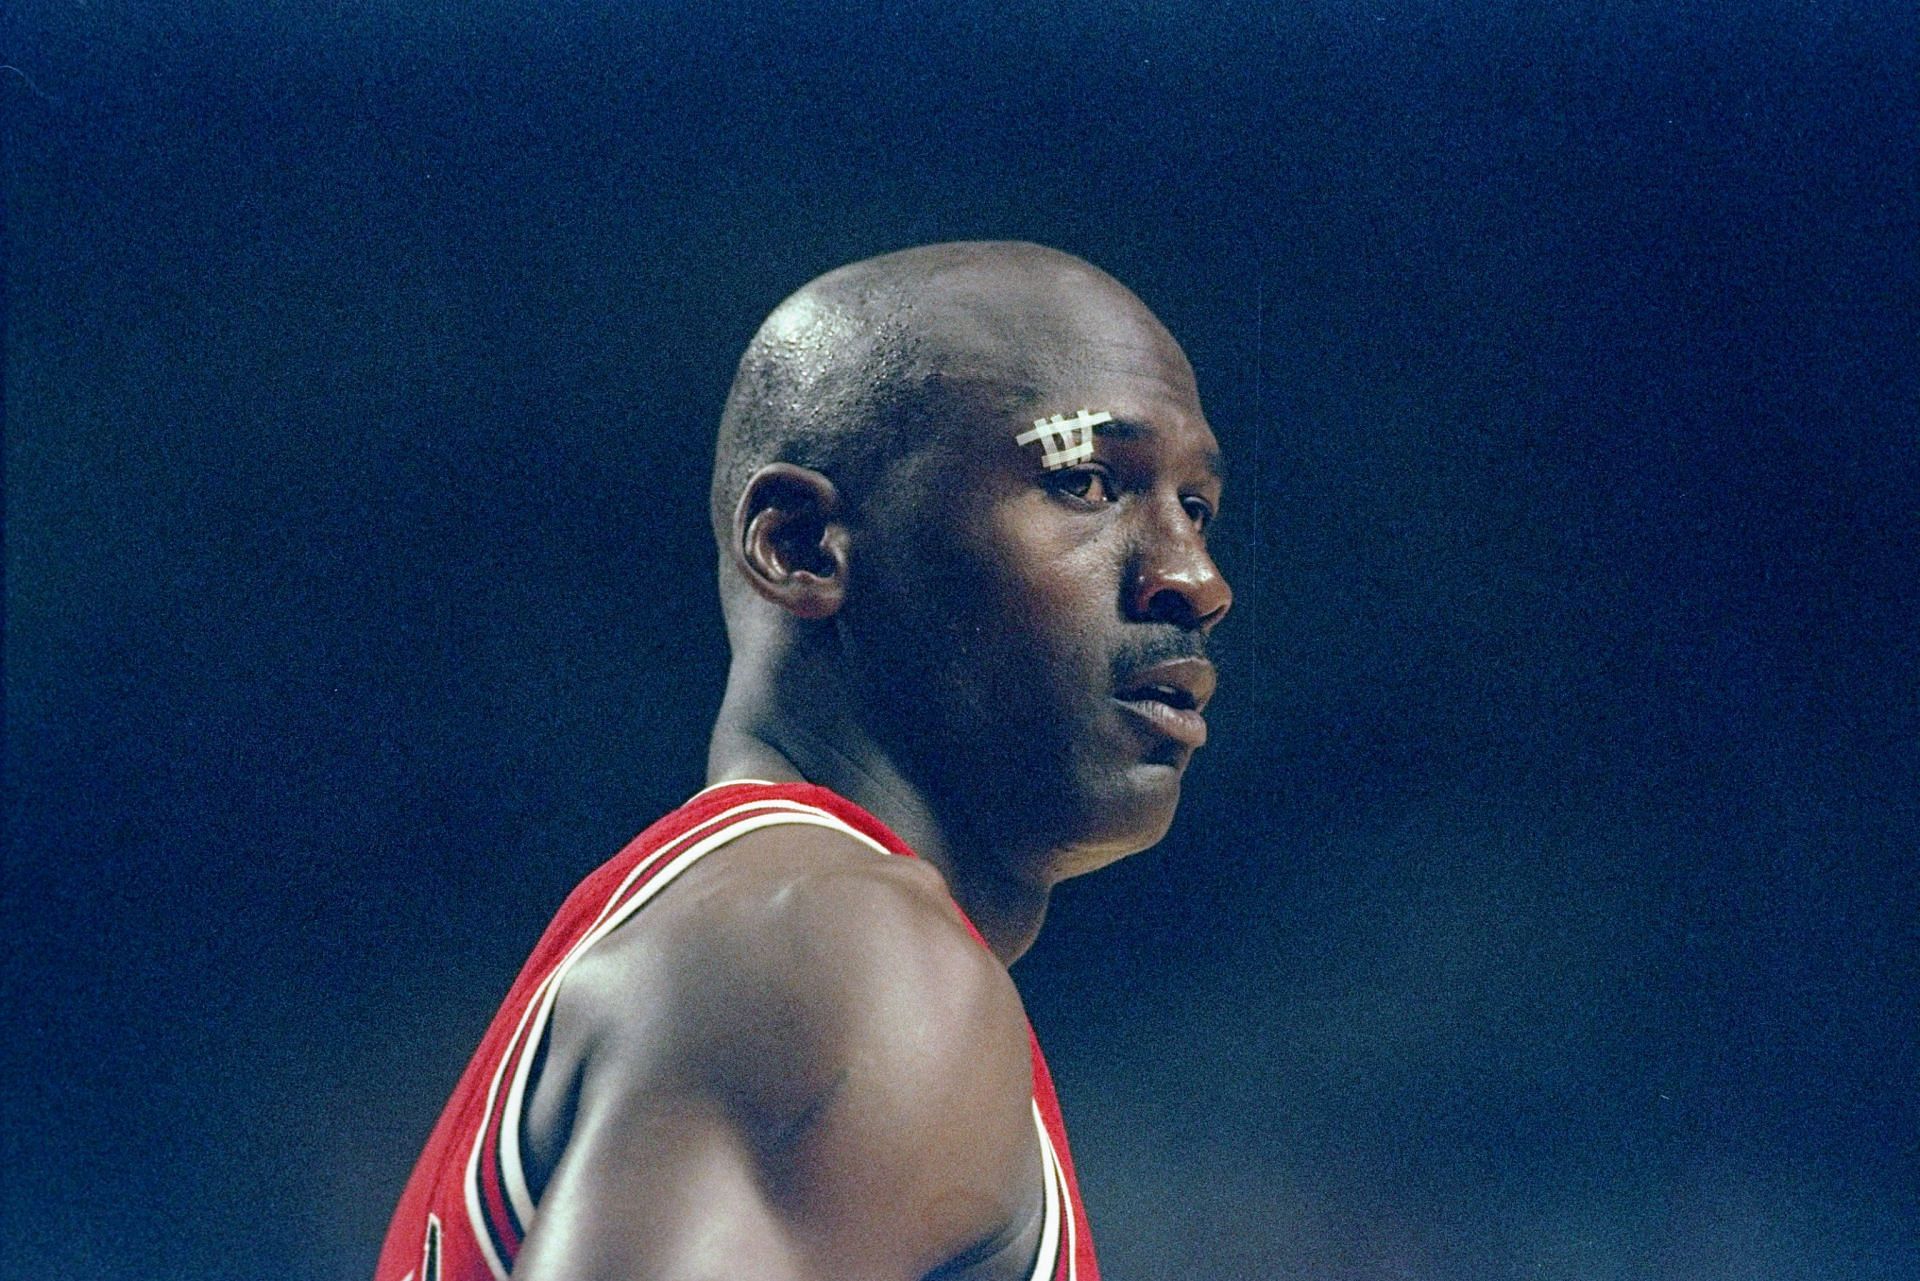 Michael Jordan memorabilia has shot up in value after 'The Last Dance